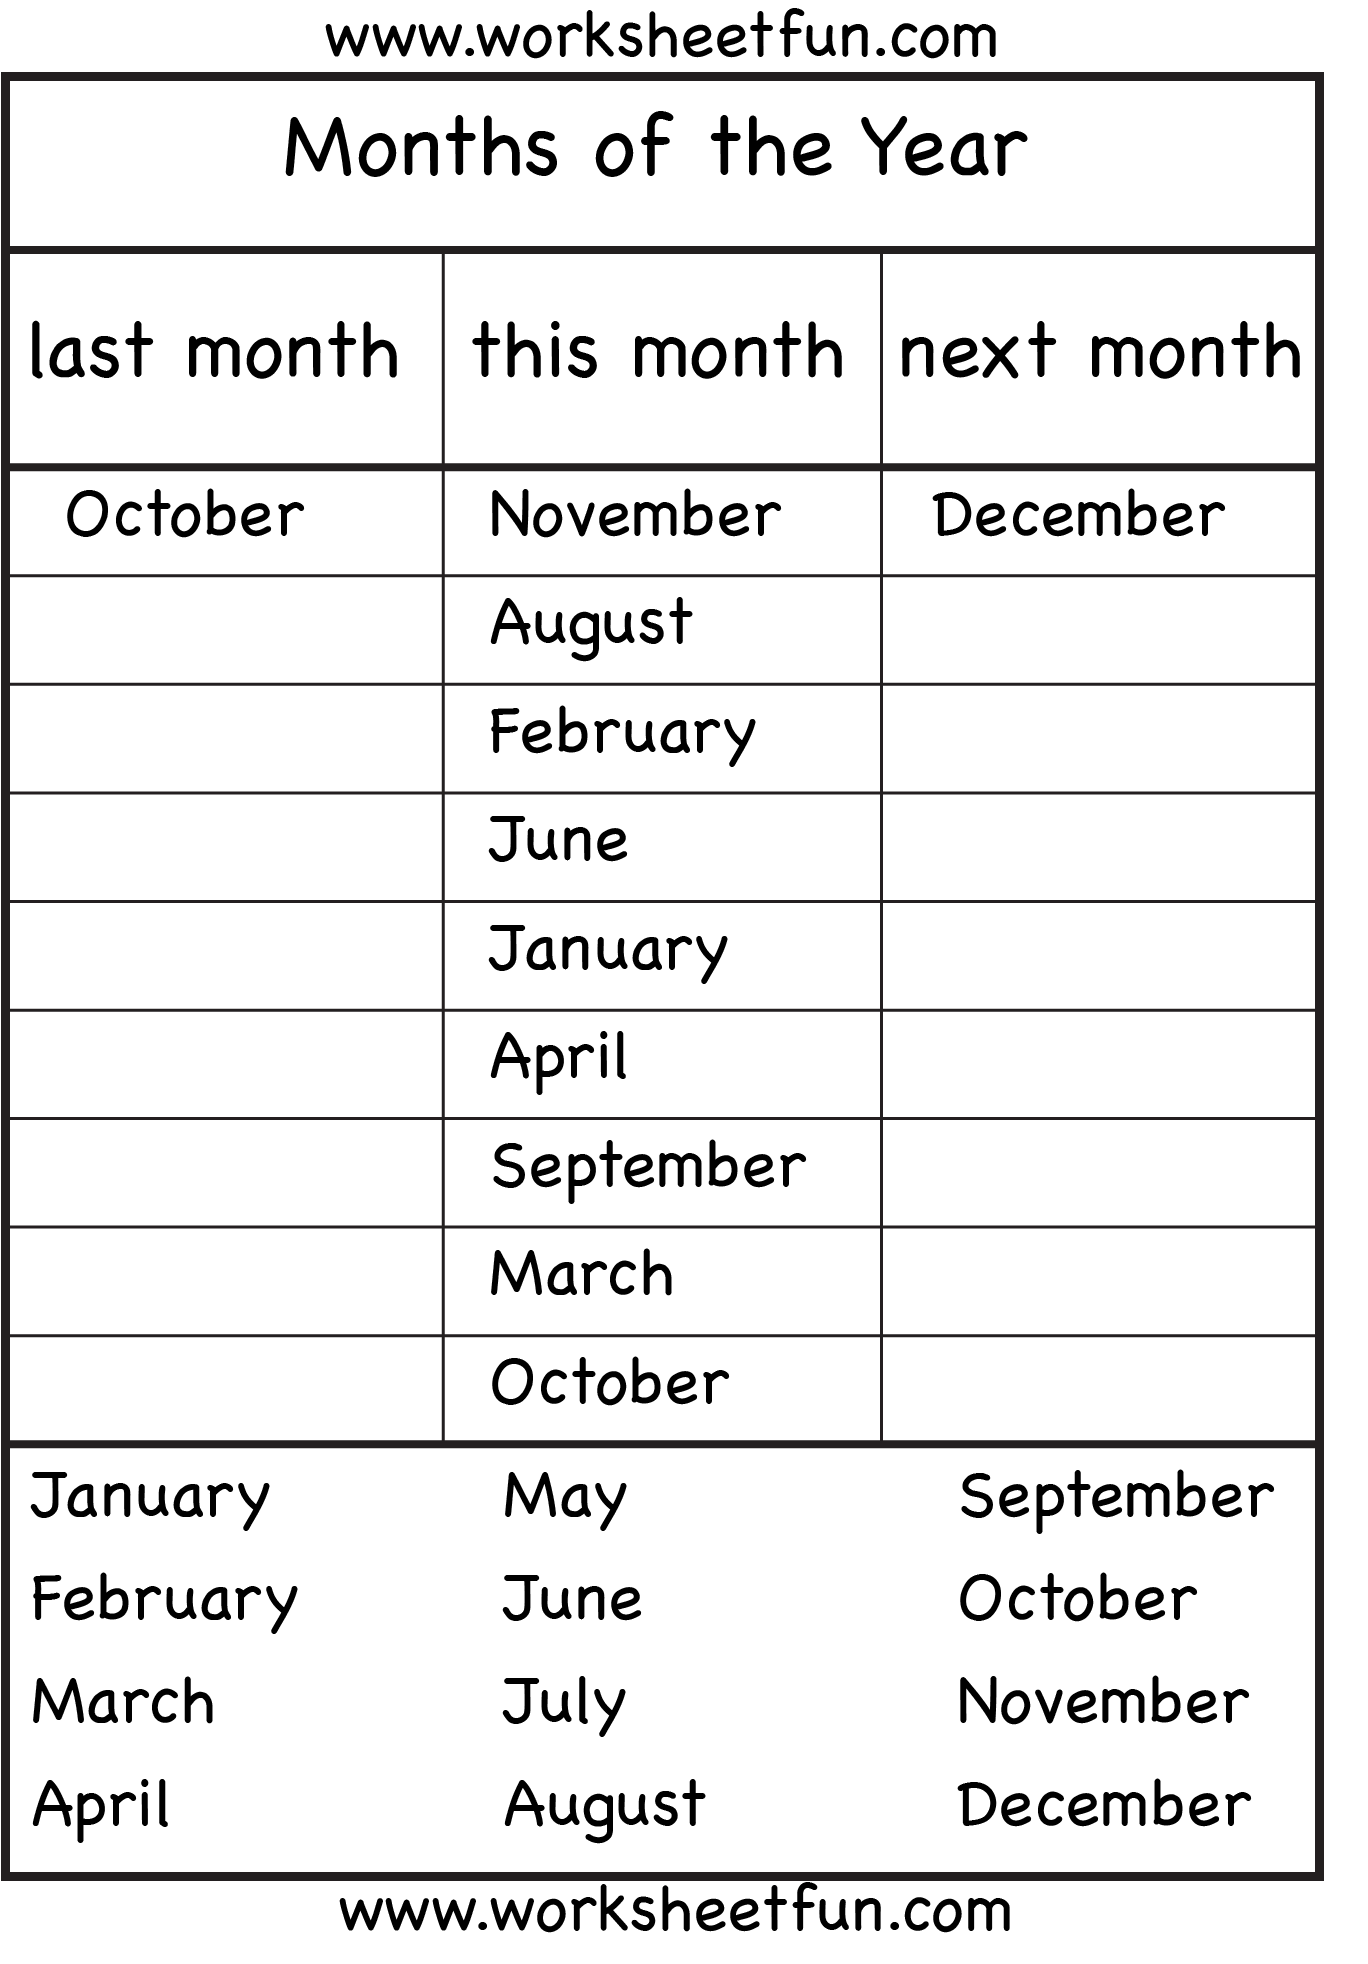 months-of-the-year-4-worksheets-free-printable-worksheets-worksheetfun